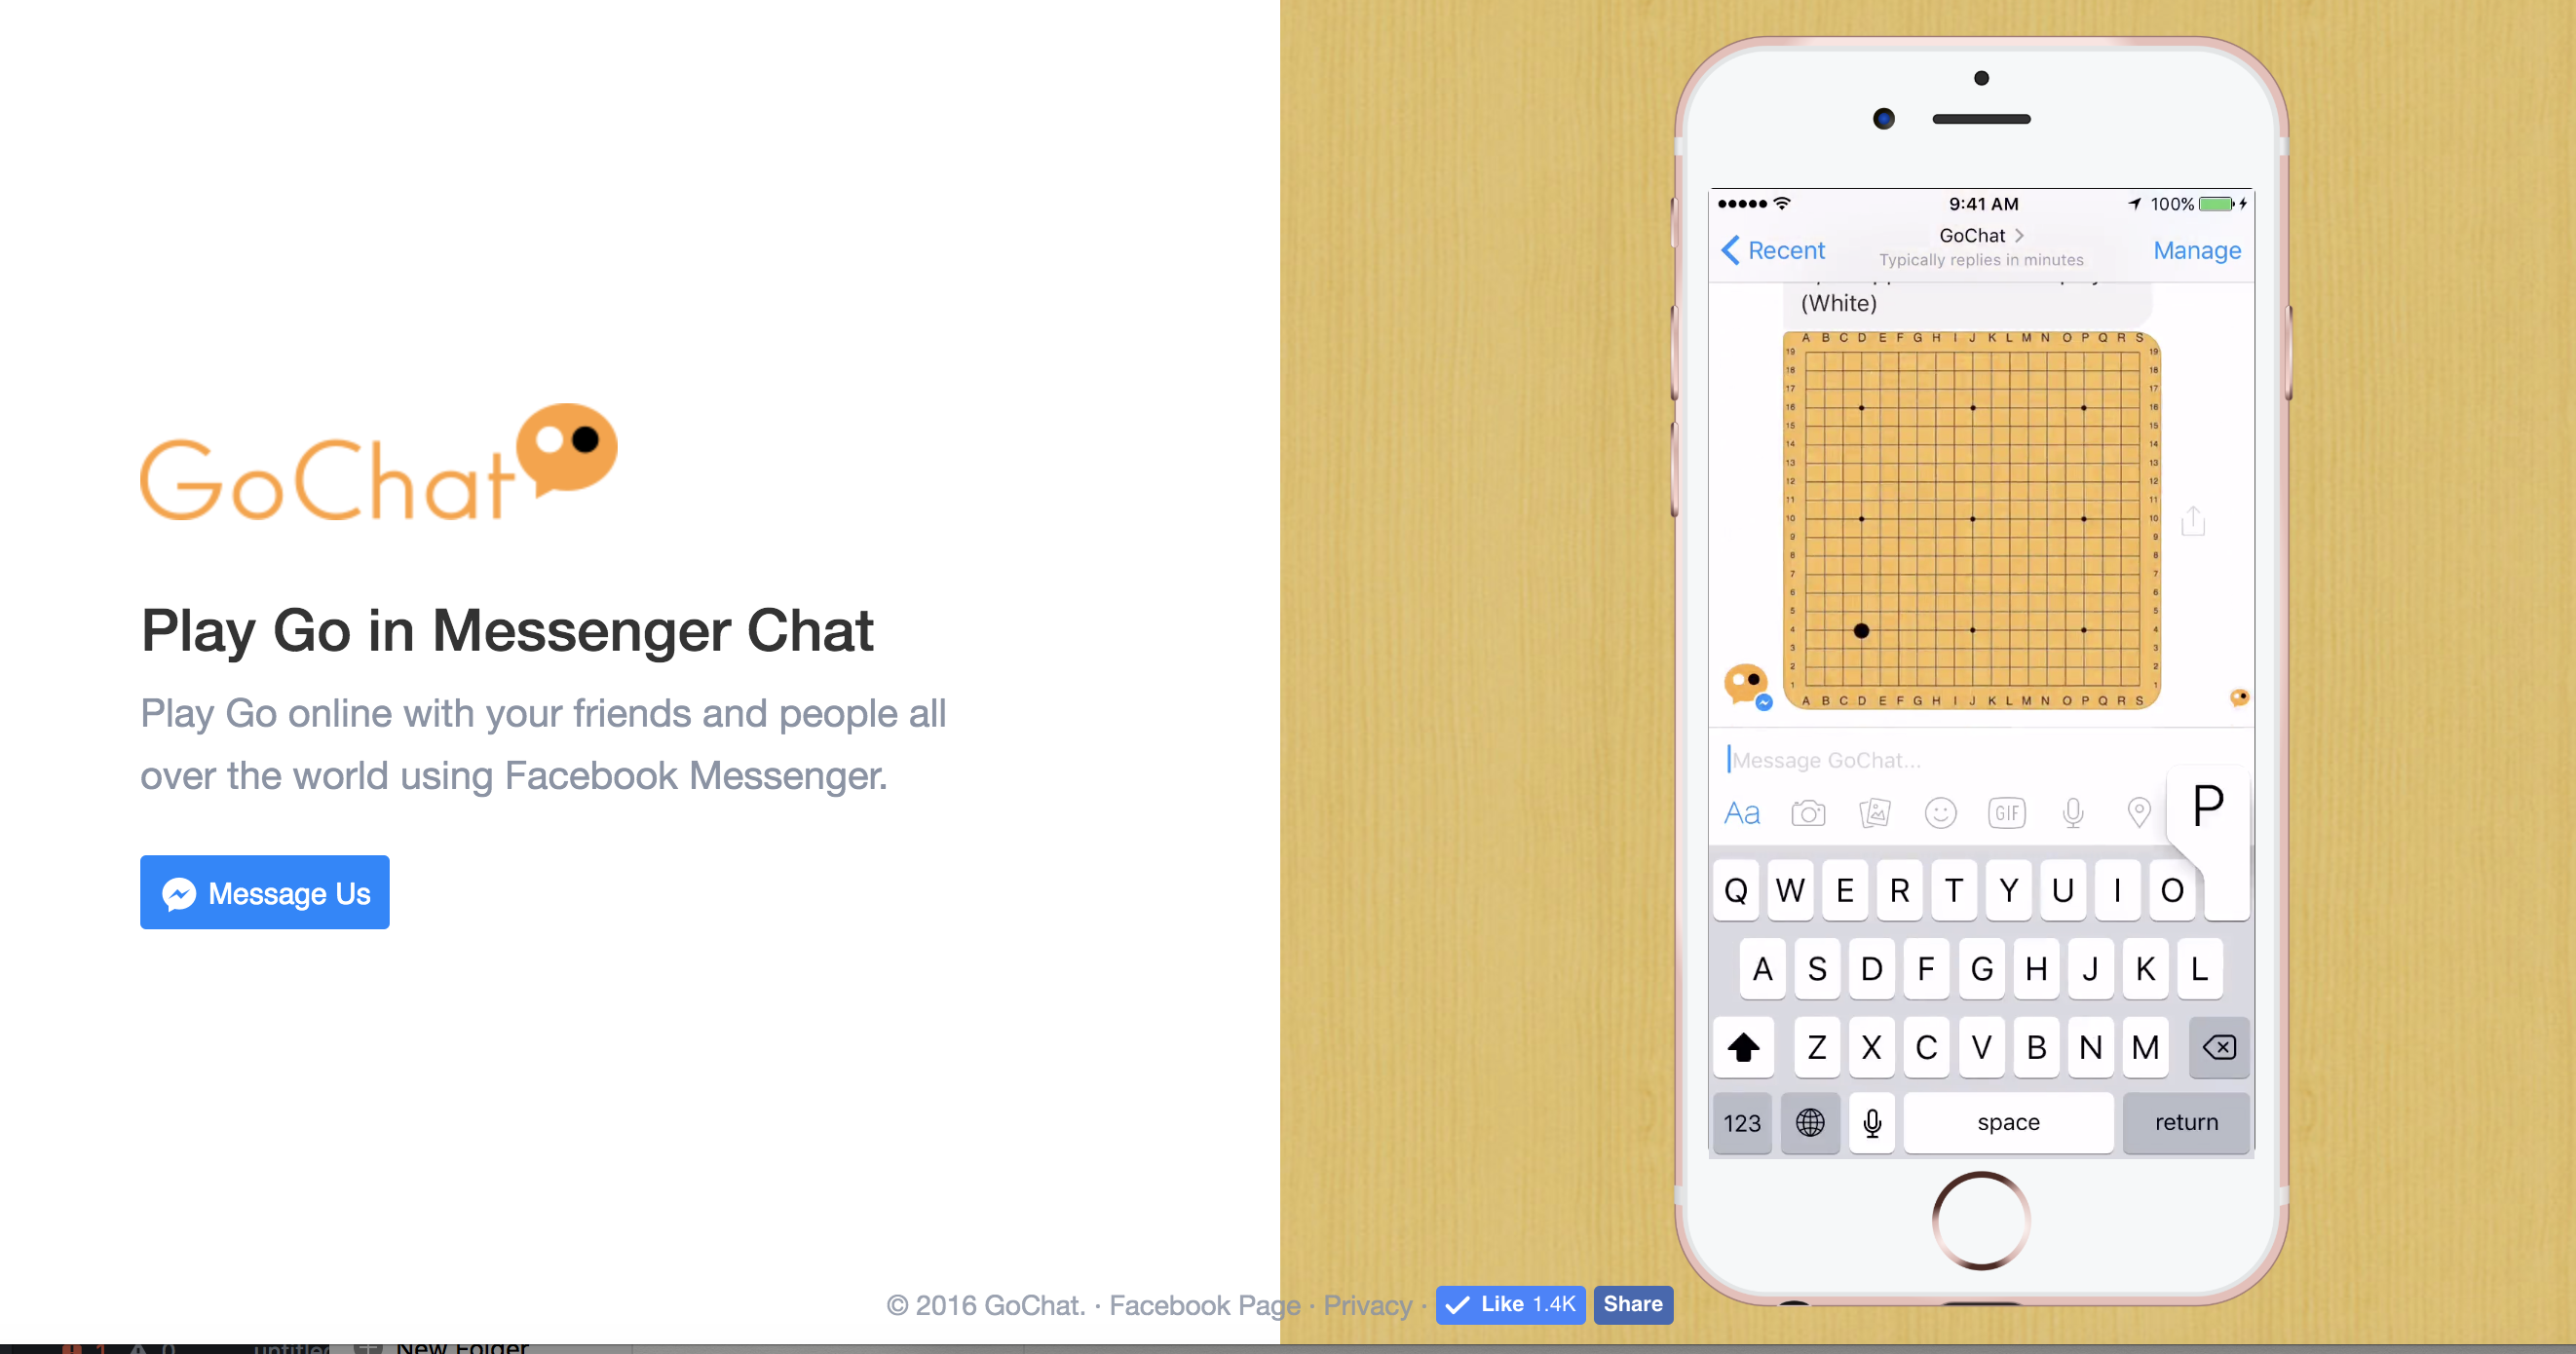 Opensource GoChat - play Go in FB Messenger